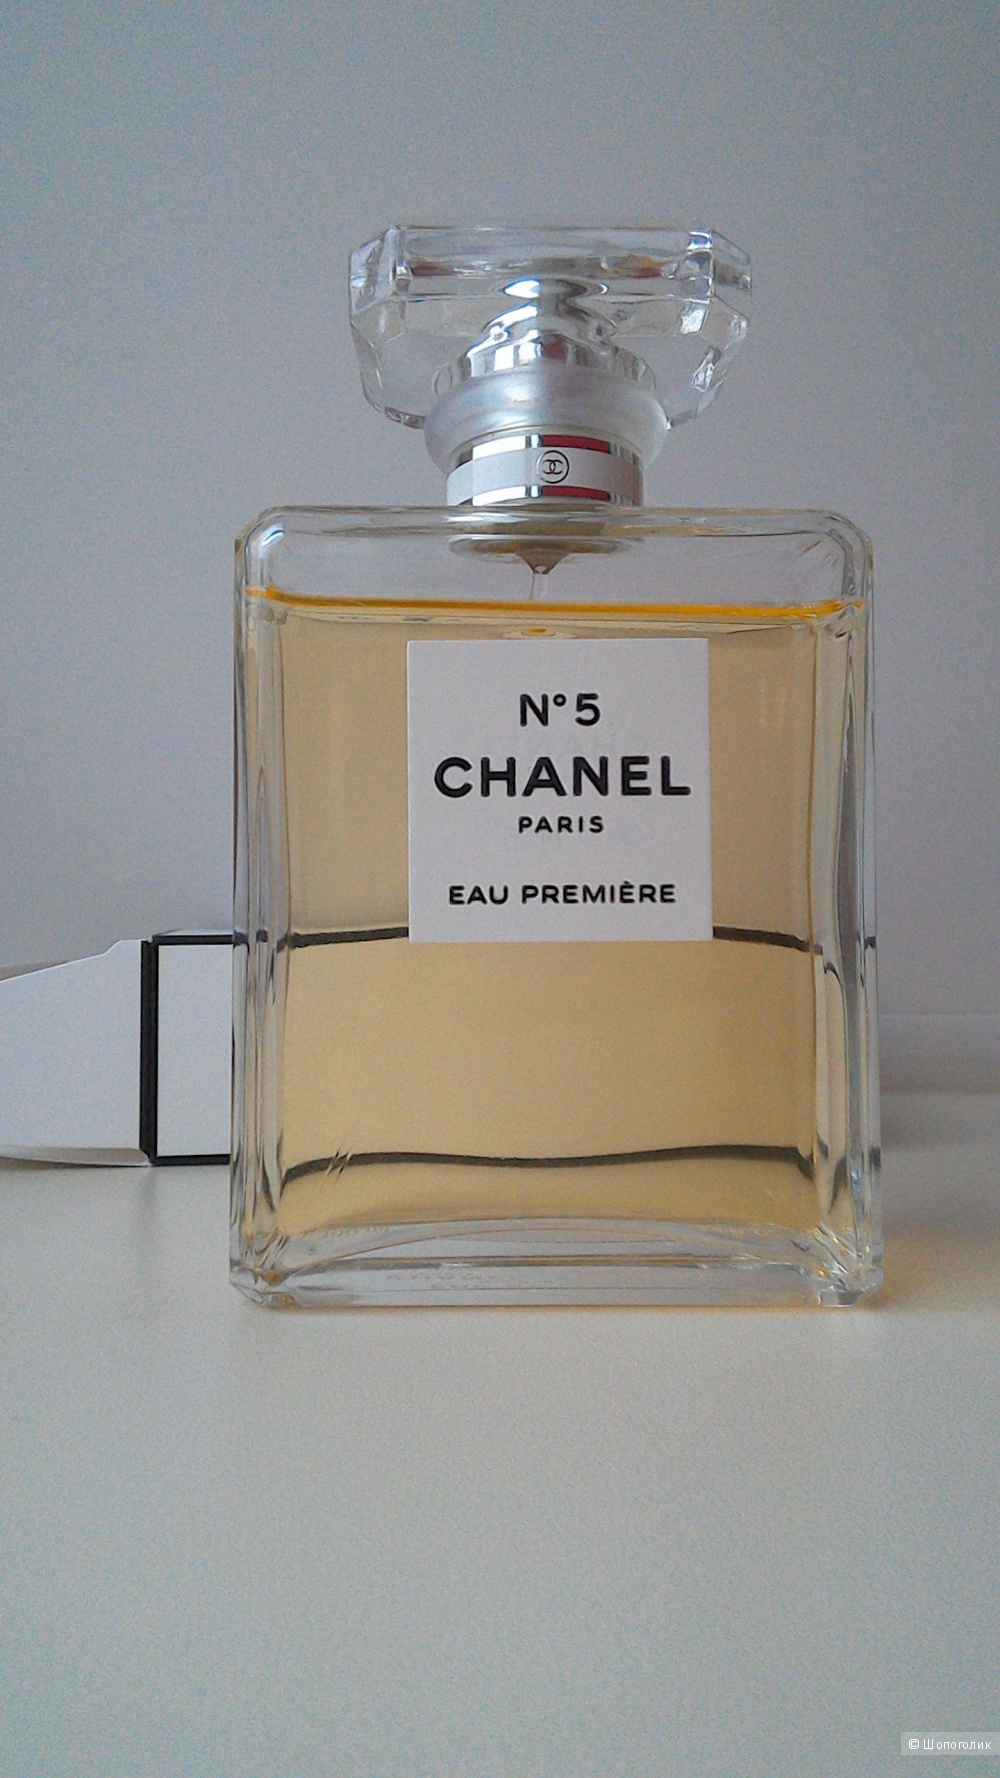 Chanel №5 eau premiere 100 ml